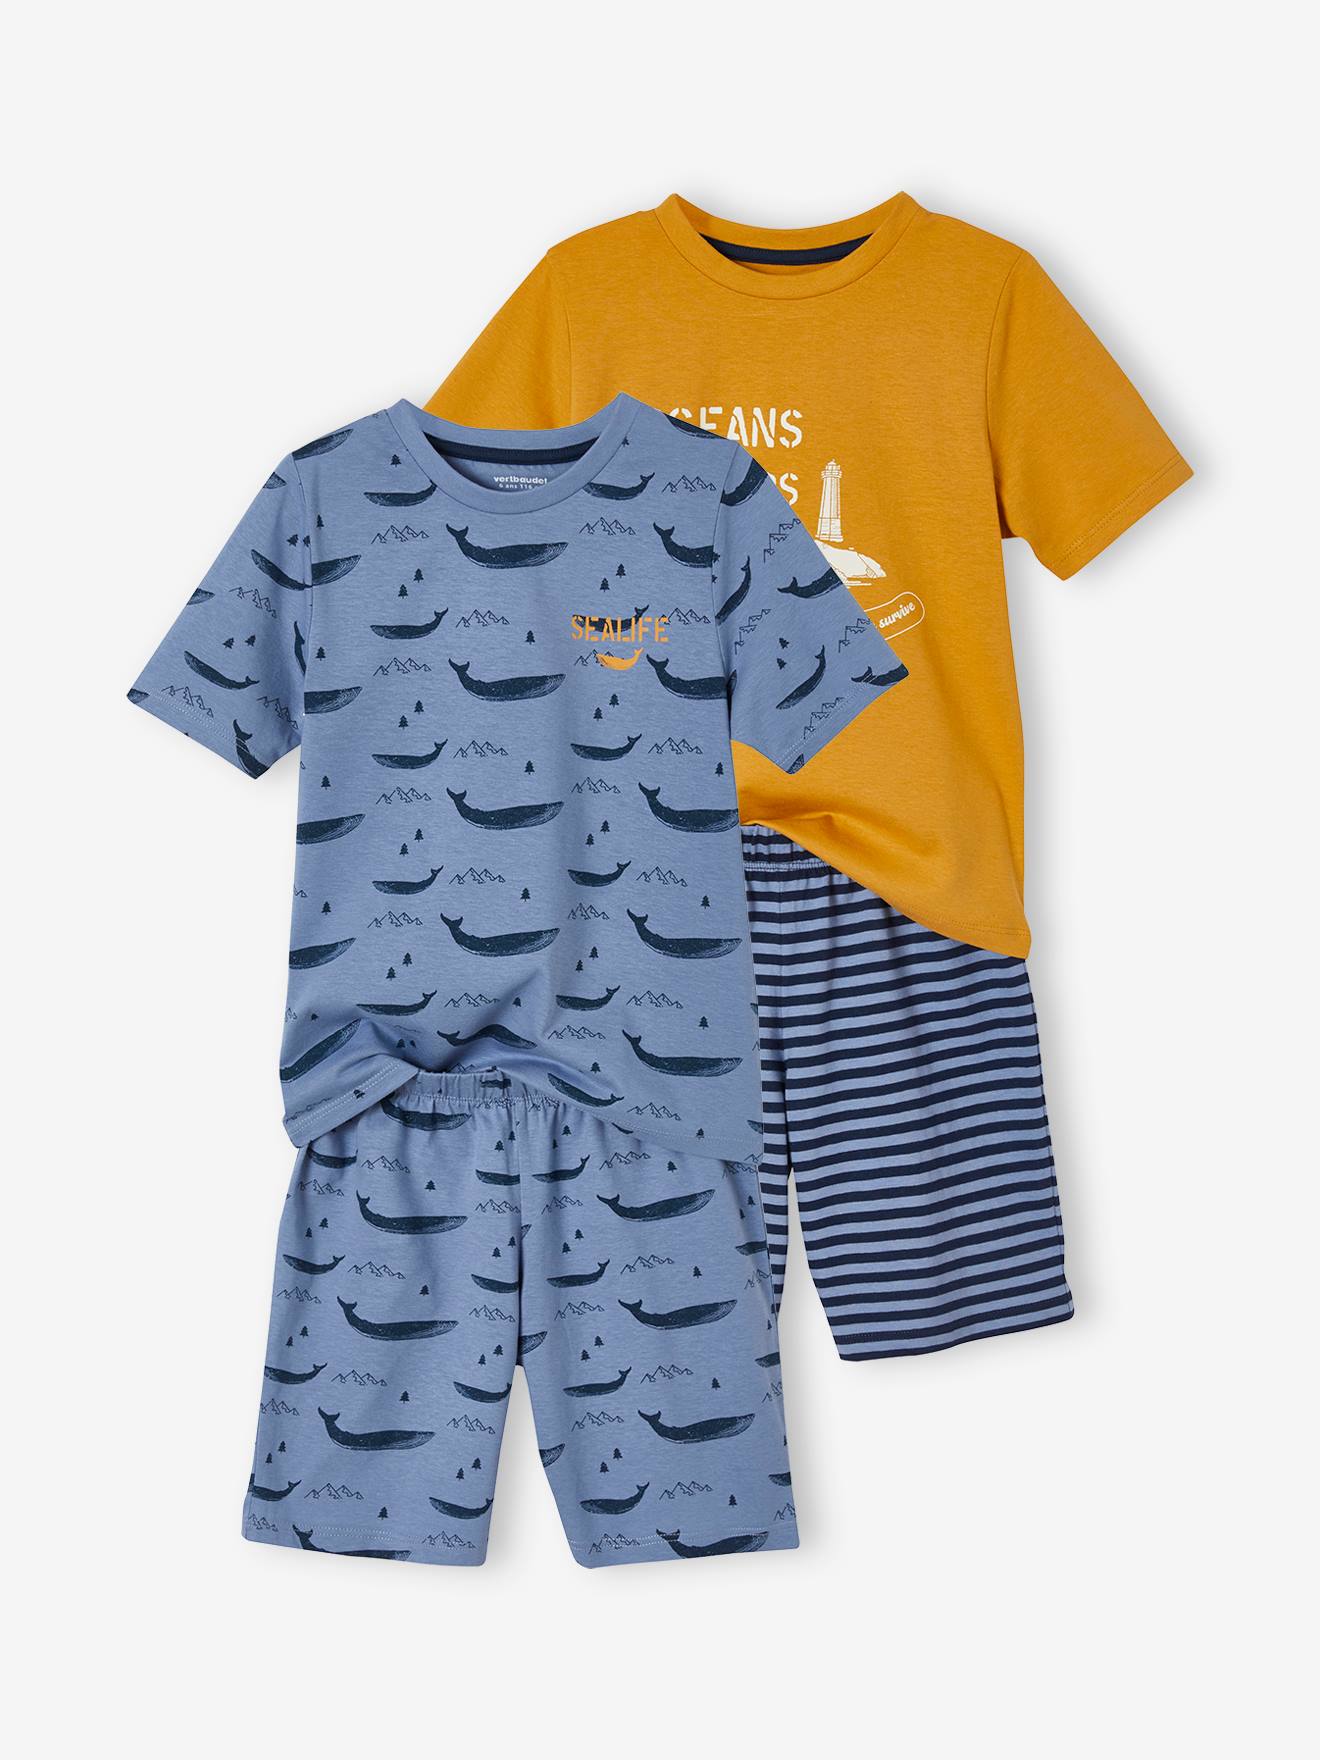 Kids Boys Girls Official FC Barcelona Pyjamas PJS Nightwear New Pyjama Sleepwear 